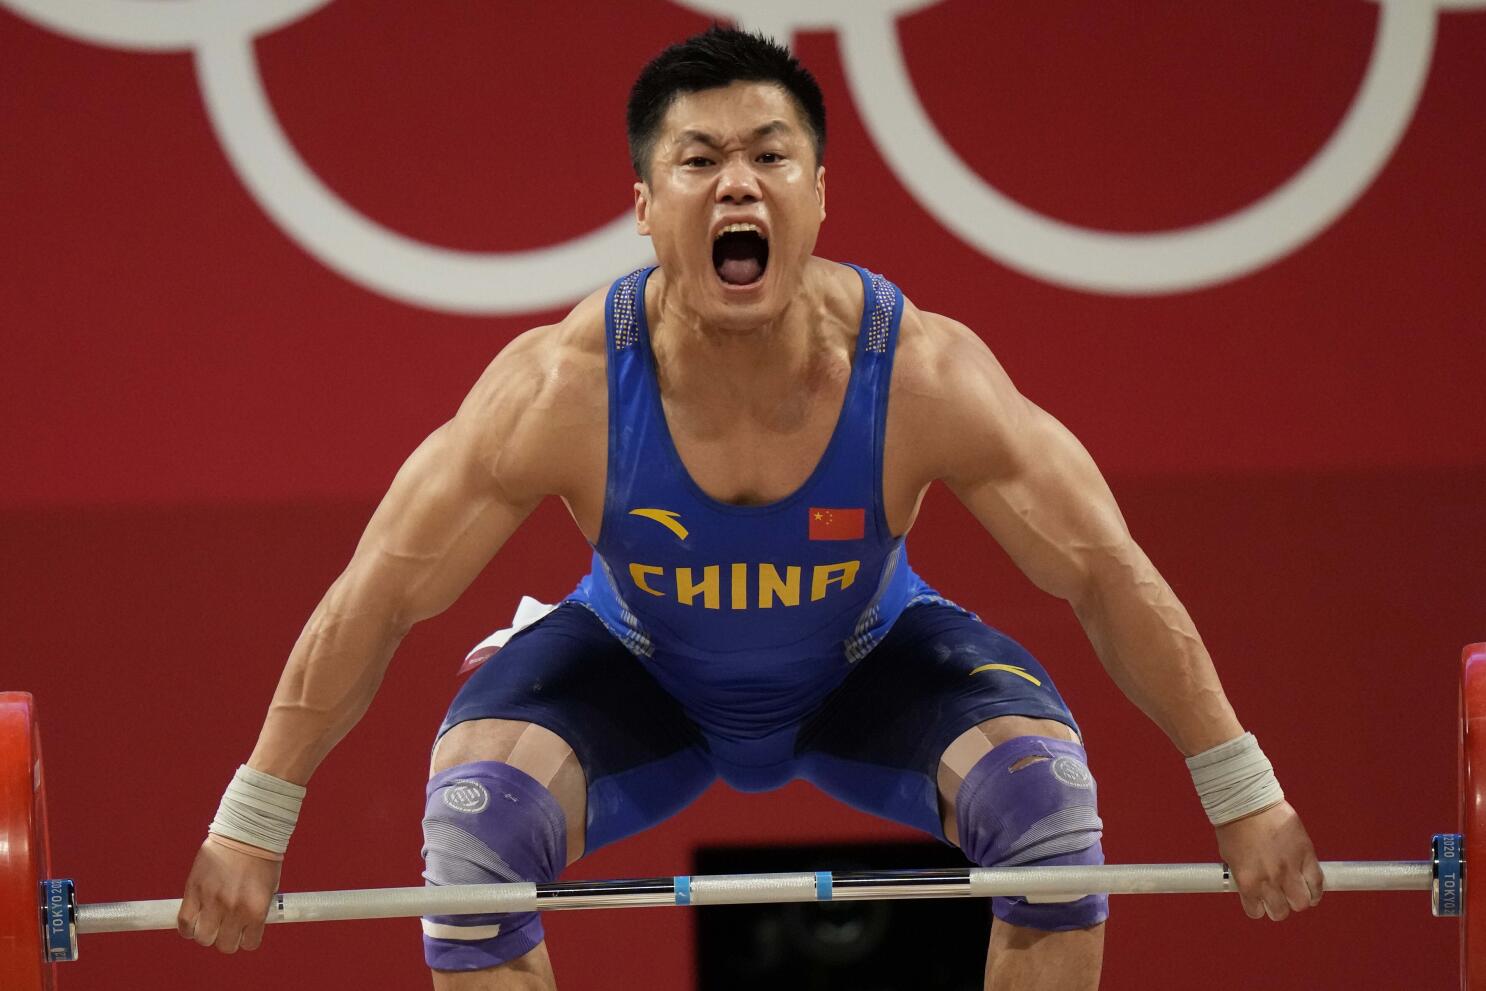 Weightlifting-China's veteran Lyu wins gold in men's 81kg